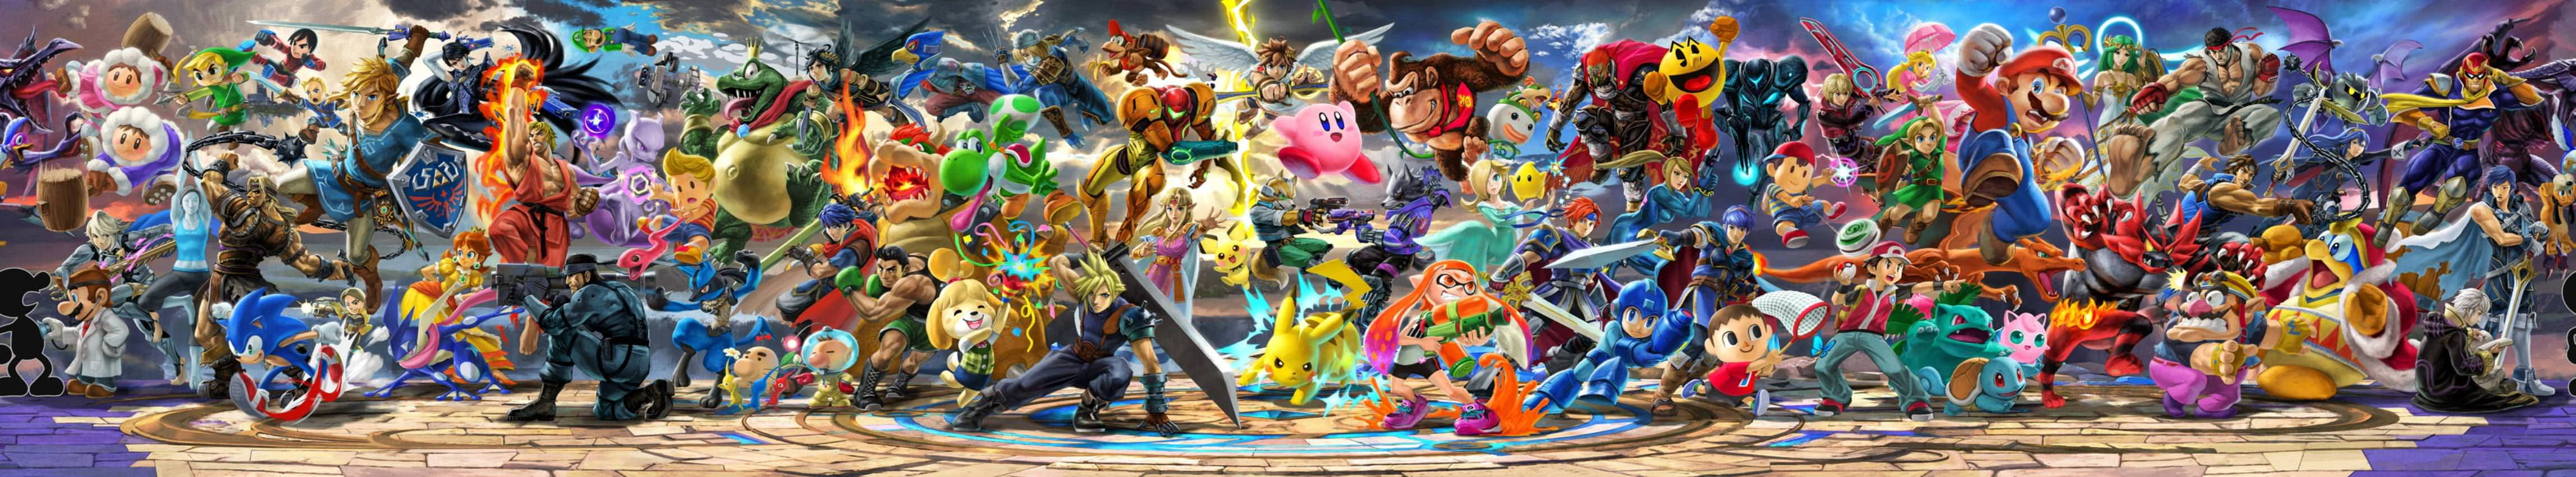 Intense Action In Super Smash Bros Ultimate Wallpaper